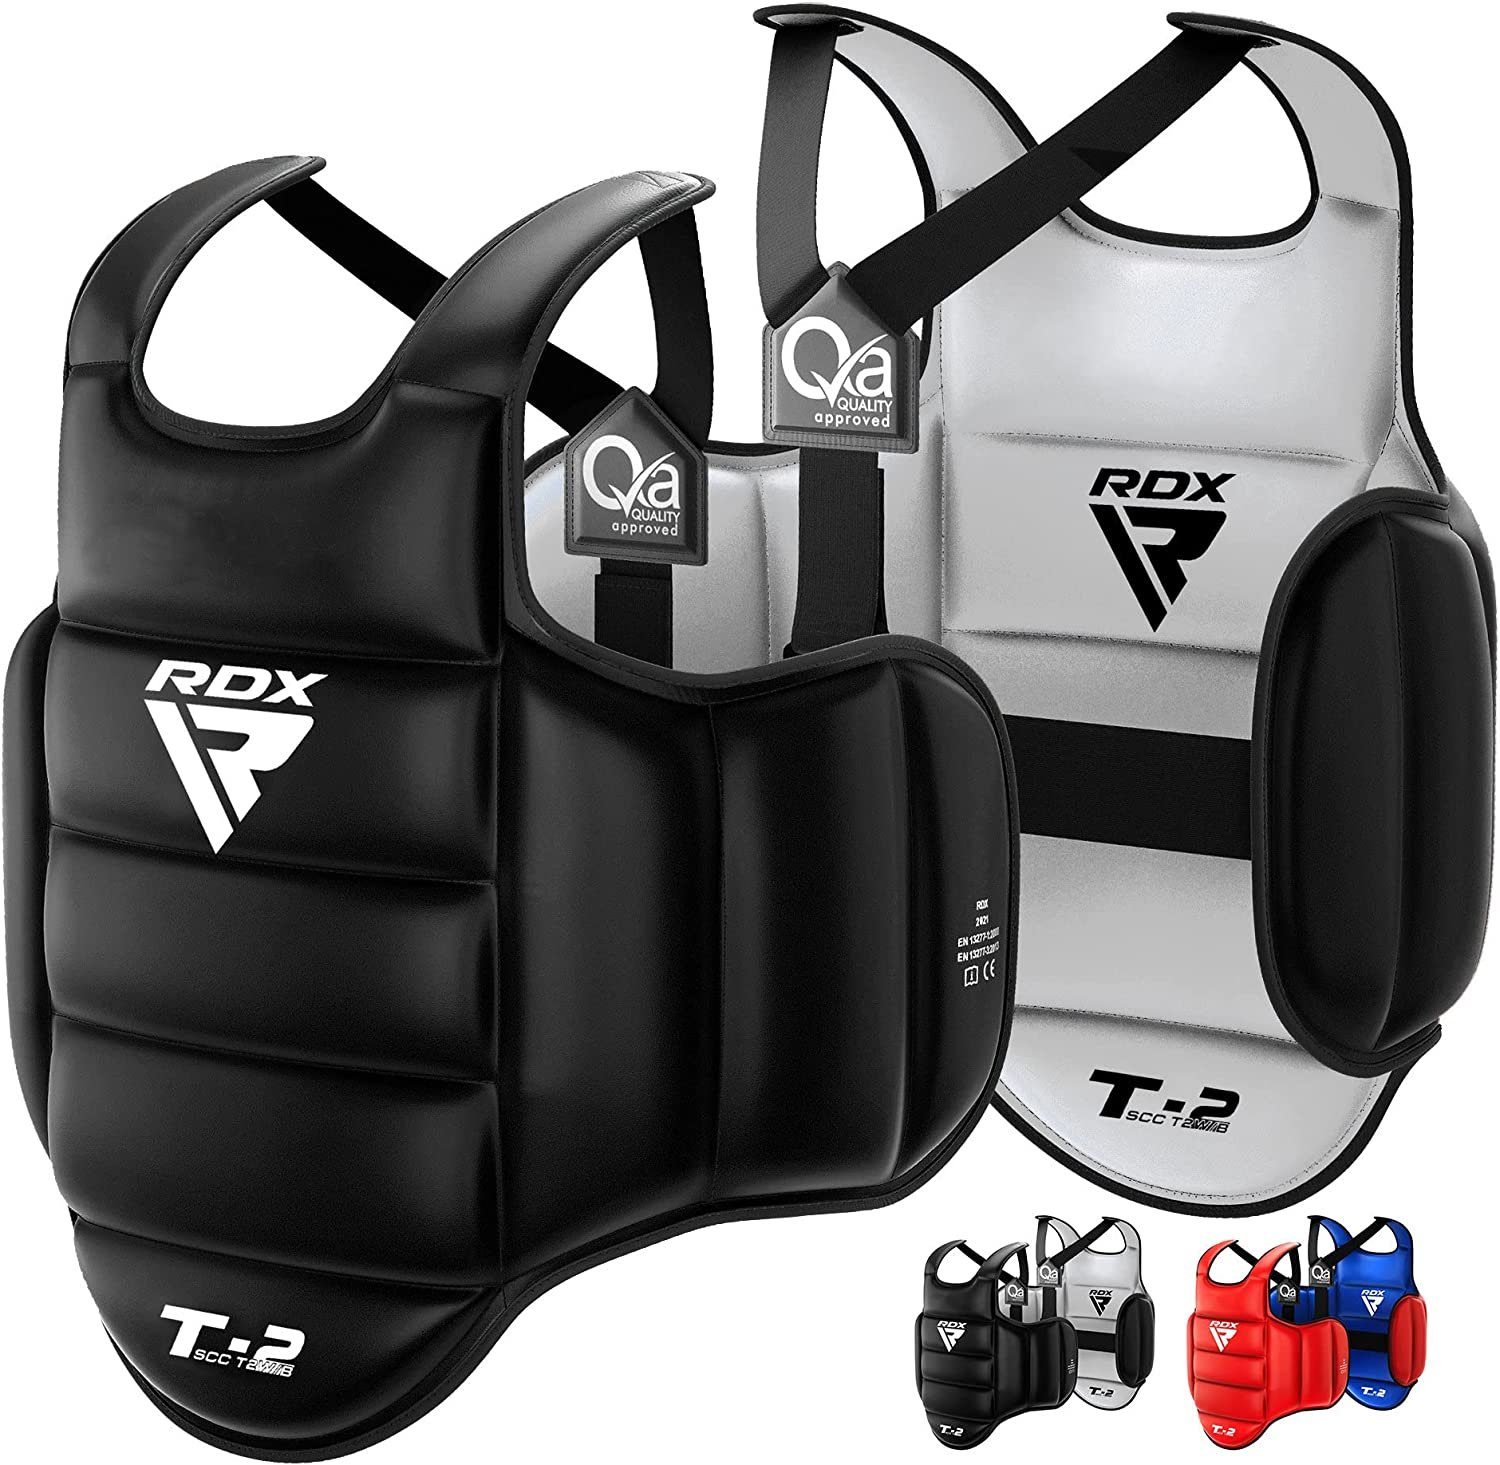 Protector Sports White/Black Body Brustschutz RDX Martial Chest RDX Arts, Kickboxing Protector